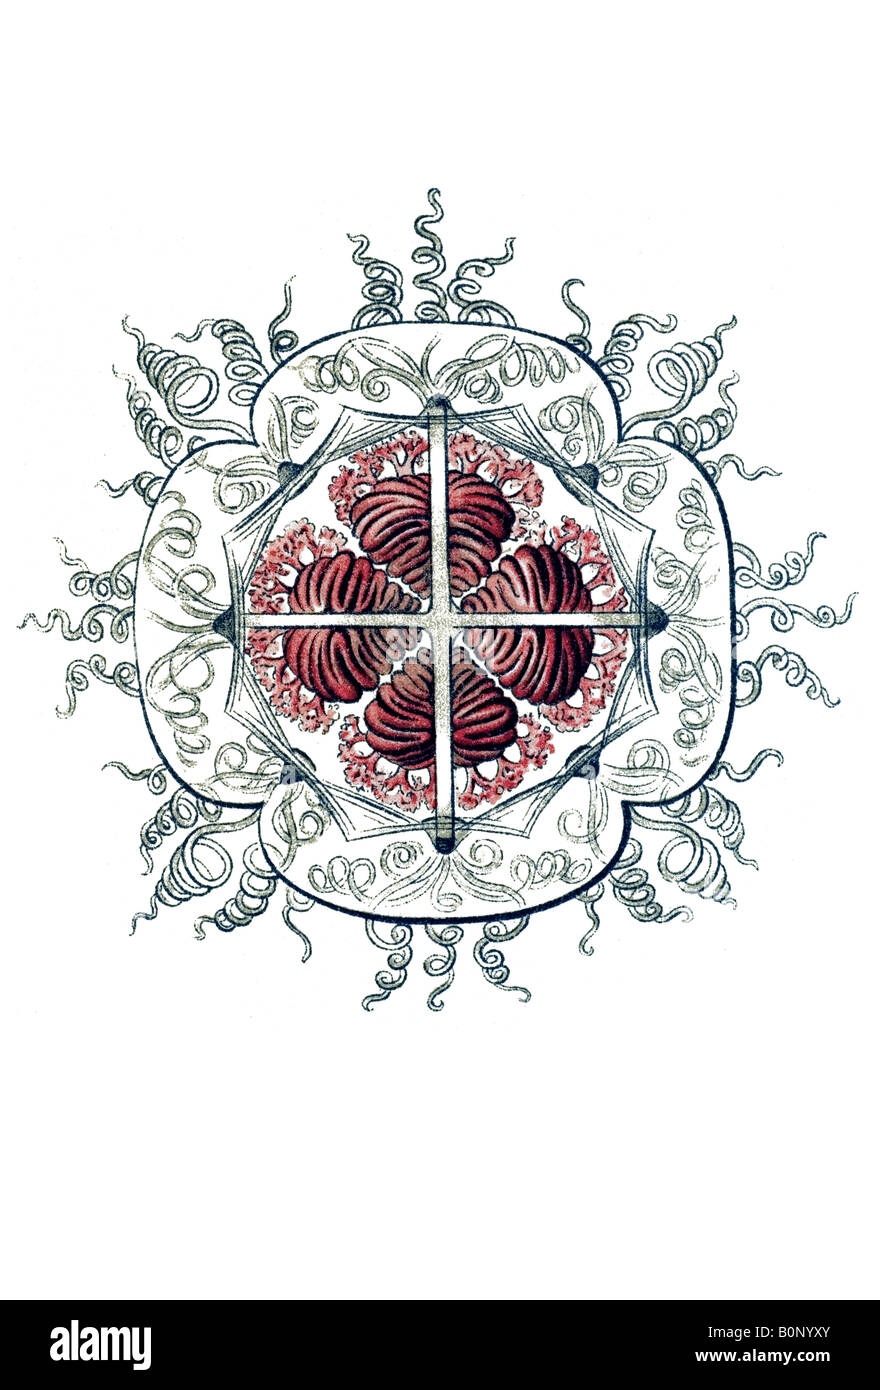 Anthomedusae Name Rathkea Fasciculata, Haeckel, Jugendstil 20th Century Europe Stockfoto